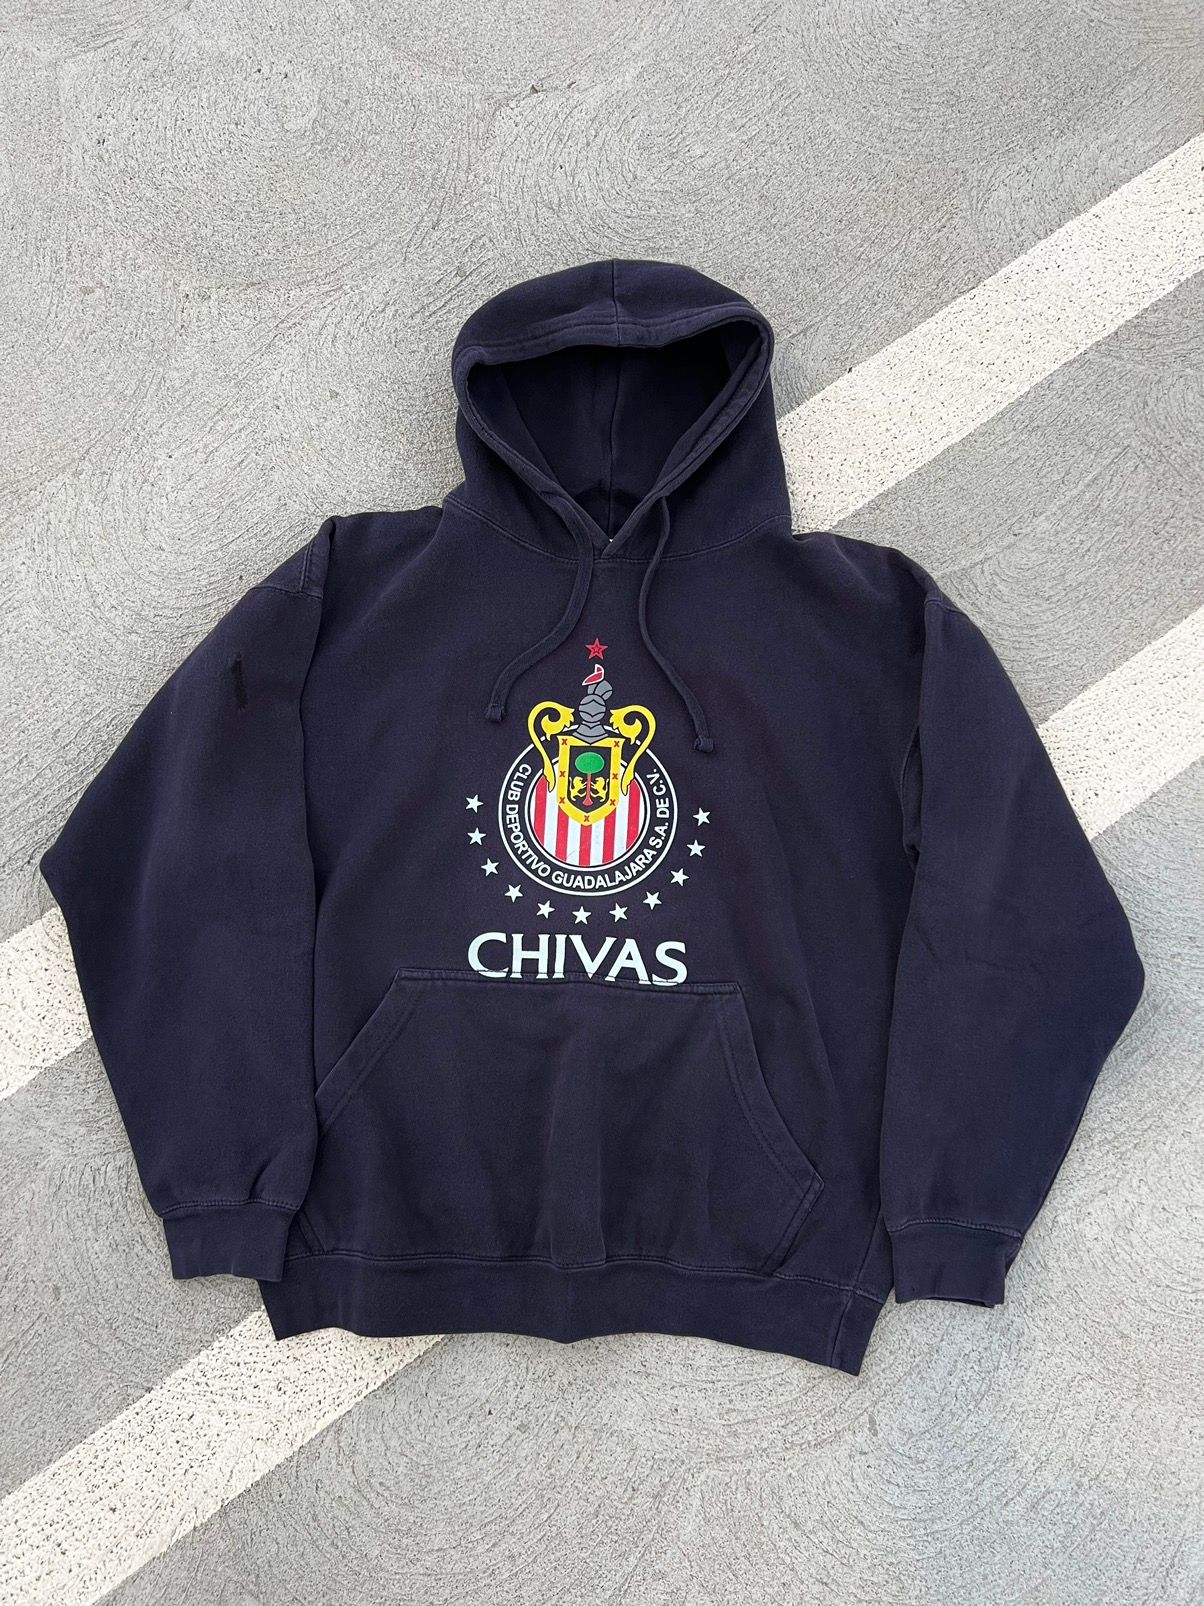 Vintage Vintage Club Deportivo Chivas Guadalajara Hoodie Size US XL / EU 56 / 4 - 1 Preview